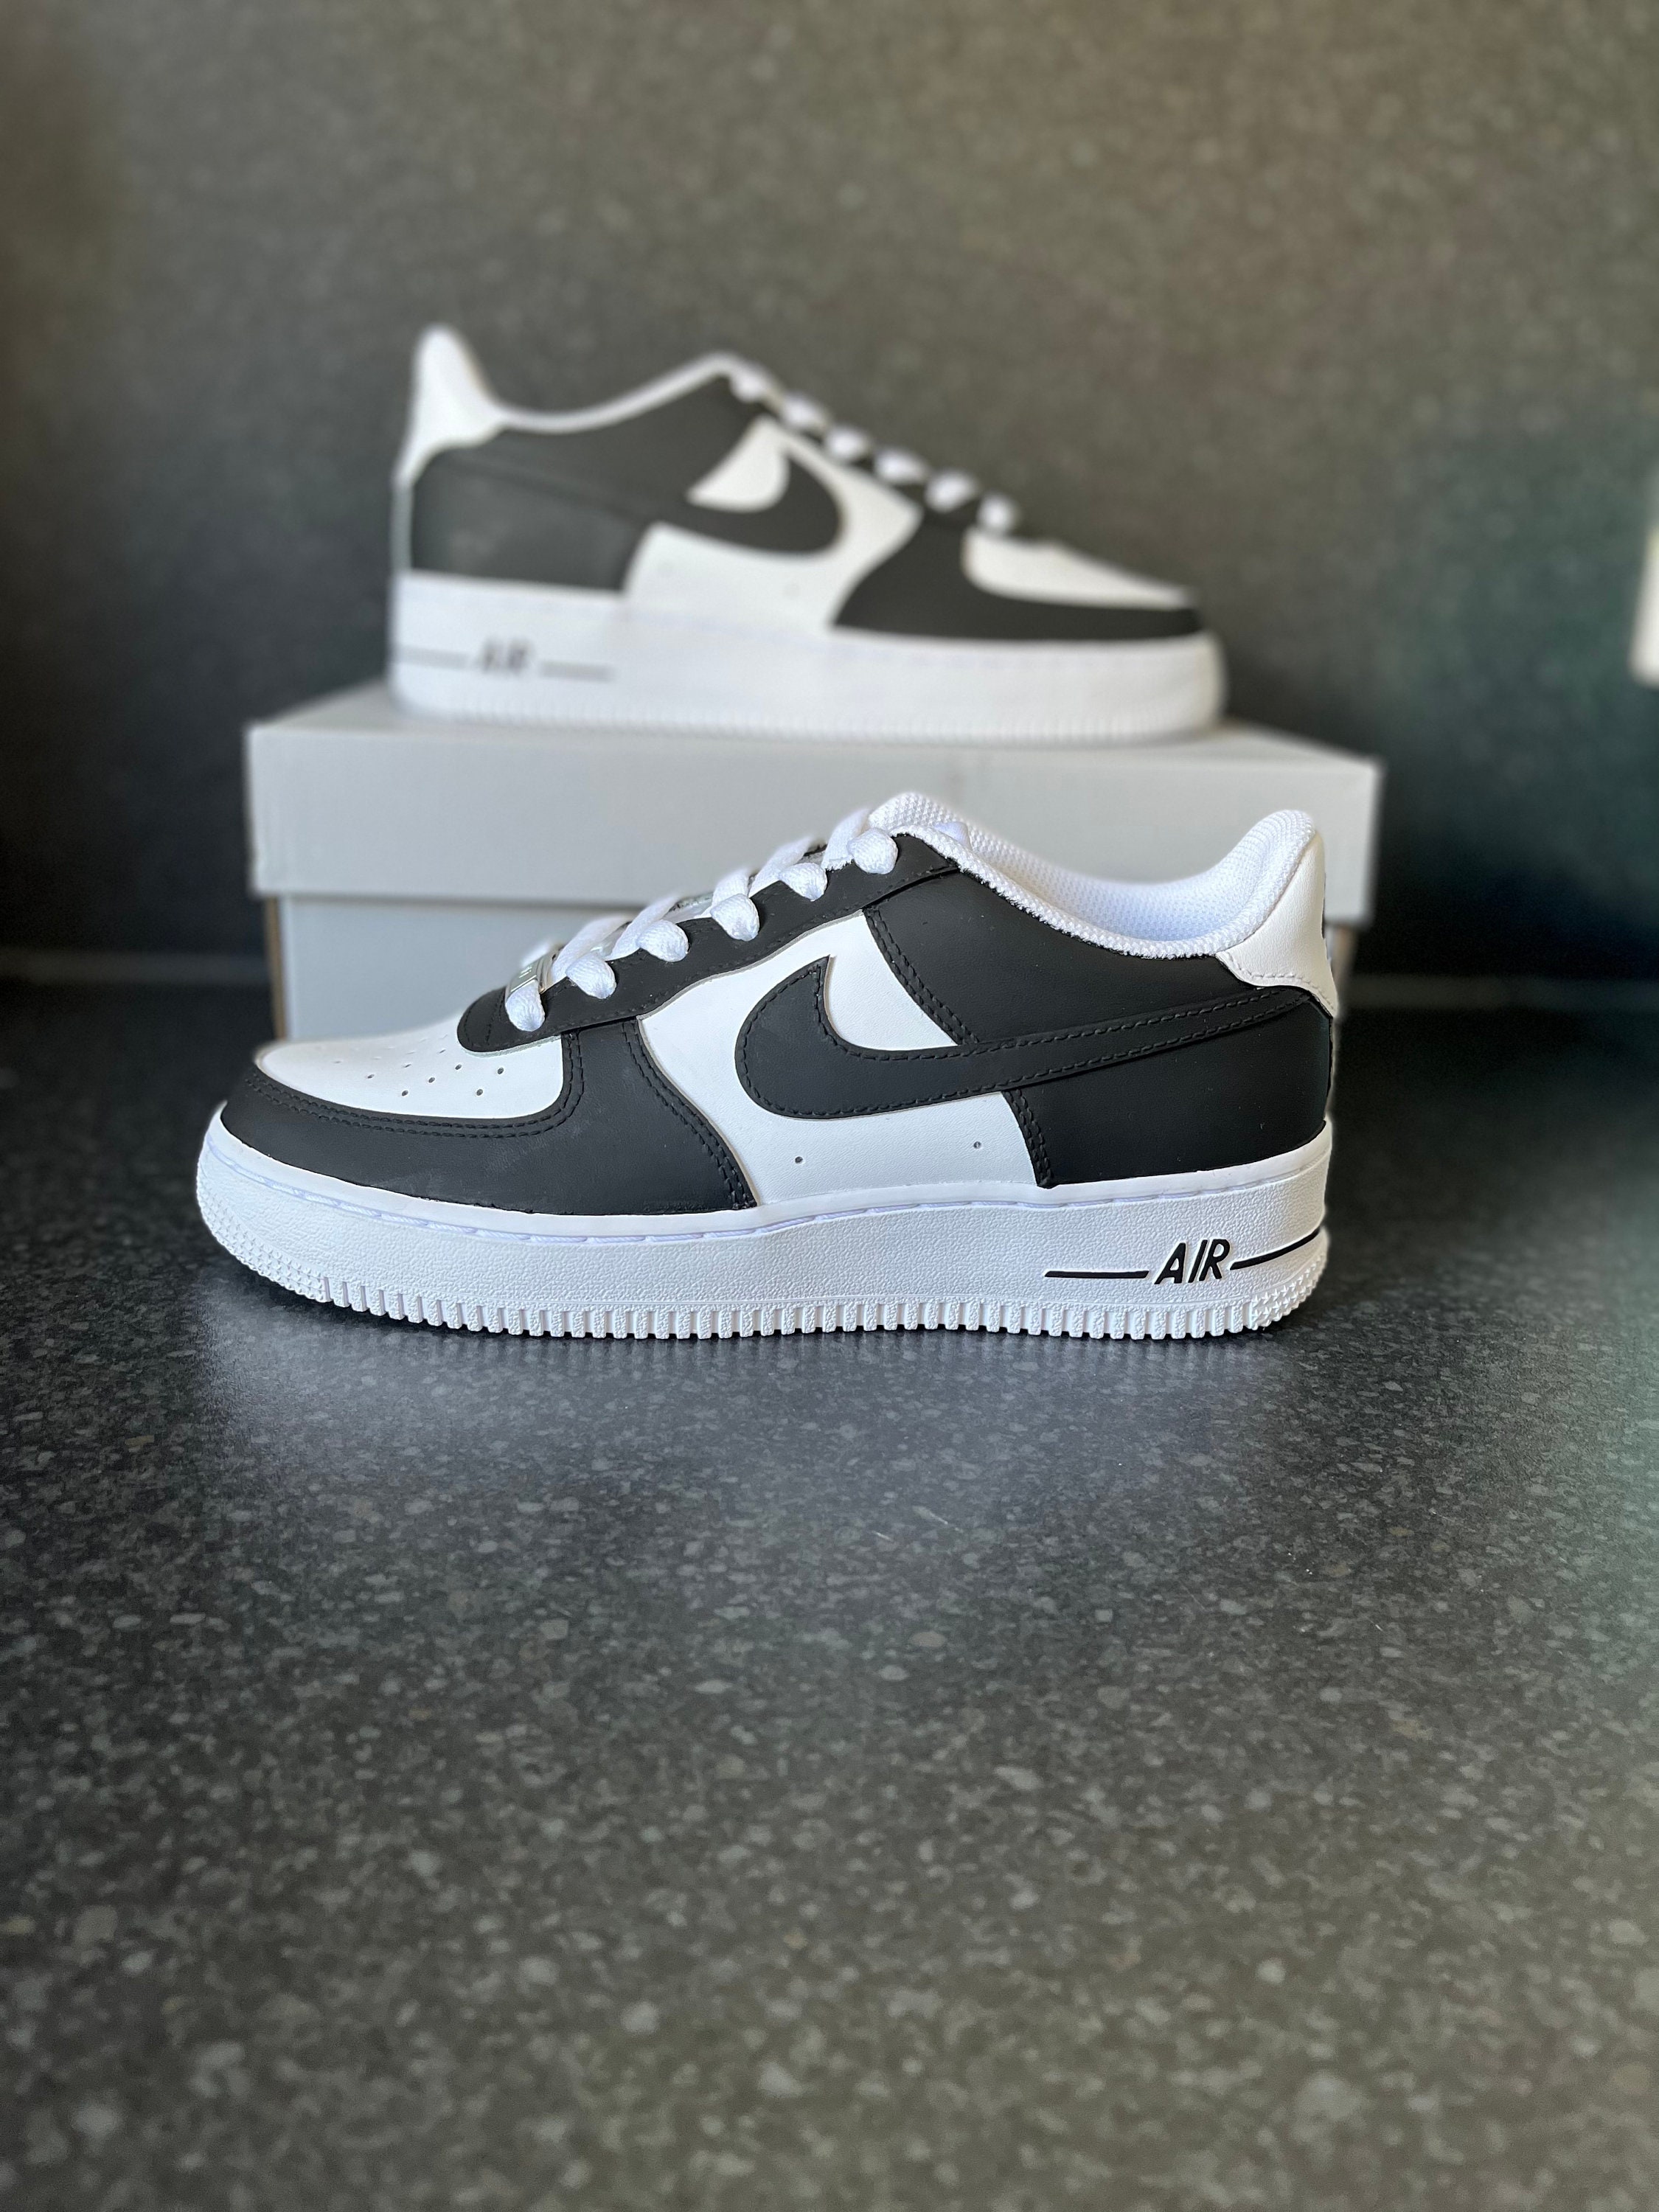 Black and White Custom Air Force 1 Sneakers 3 Y